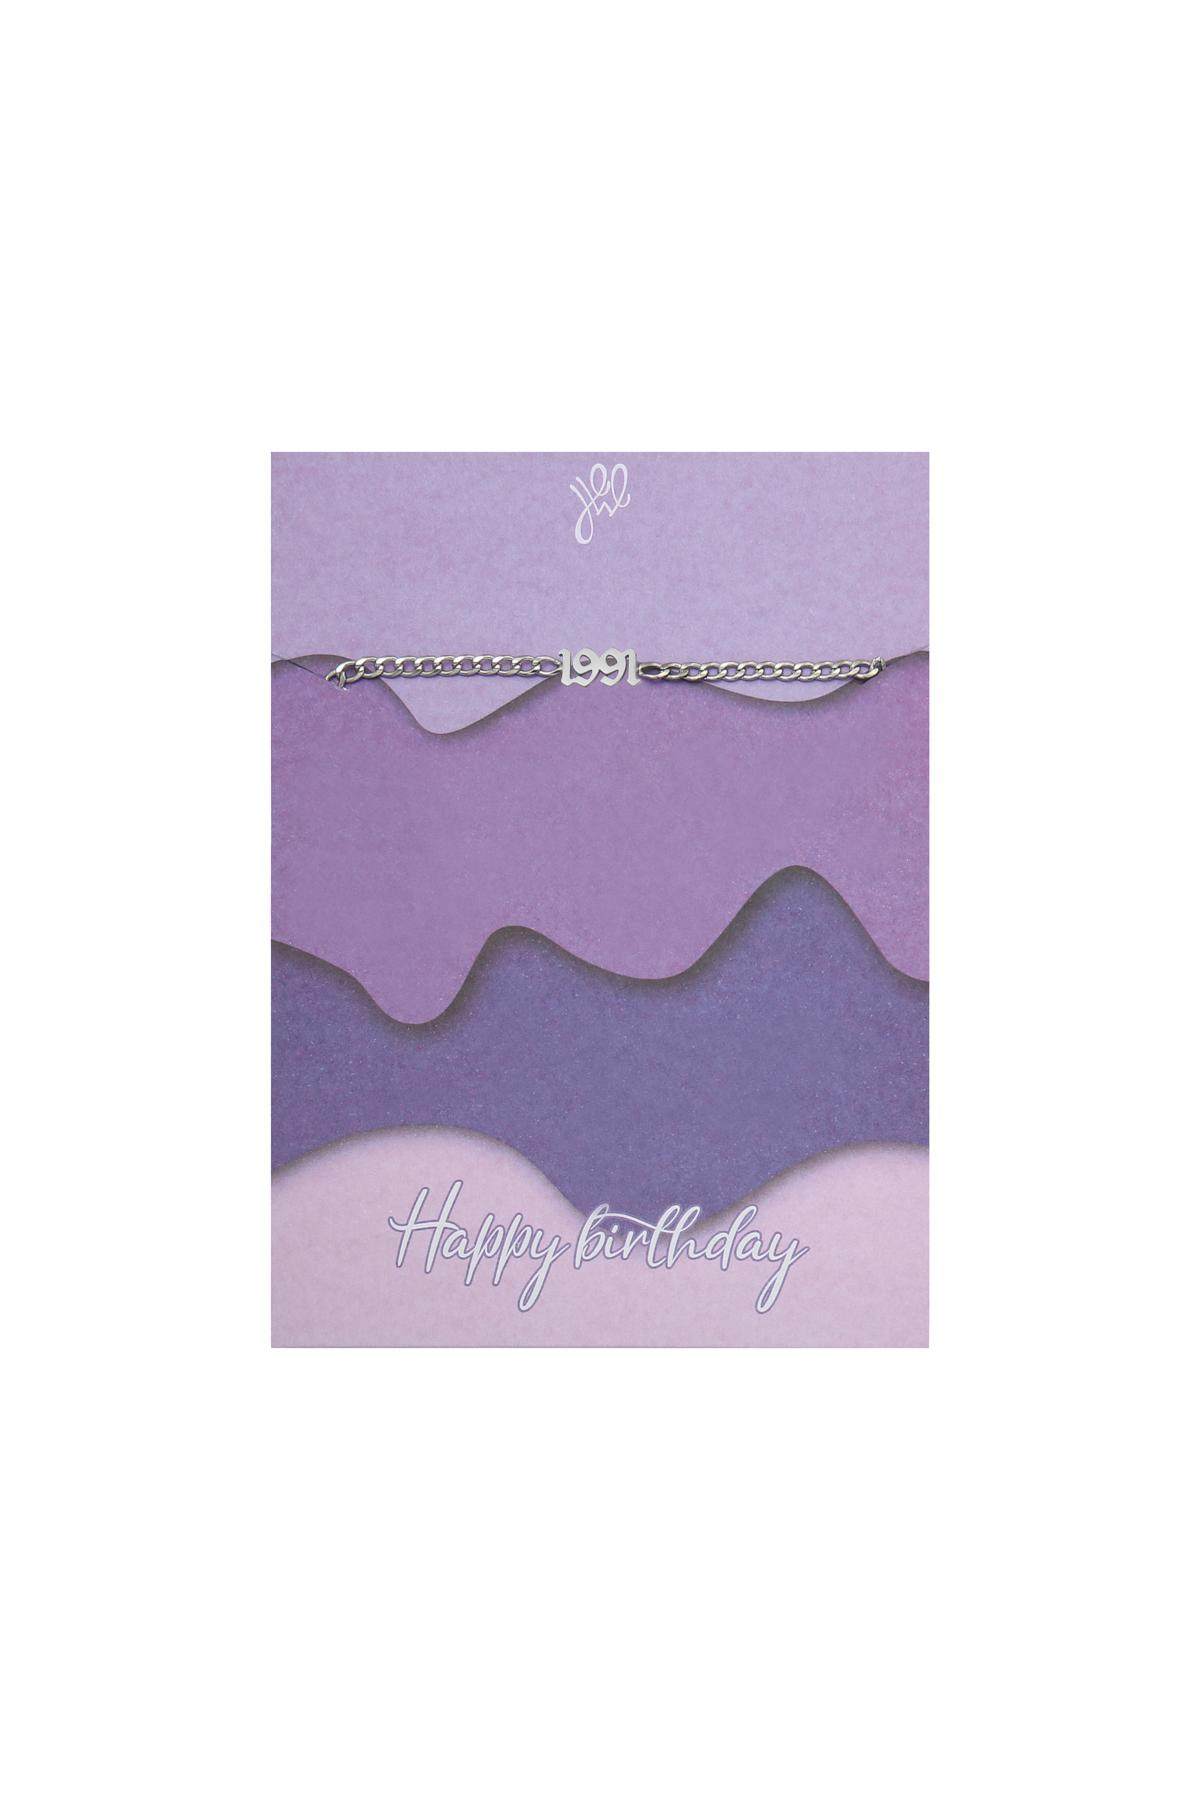 Silber / Armband Happy Birthday Years - 1991 Silber Edelstahl 